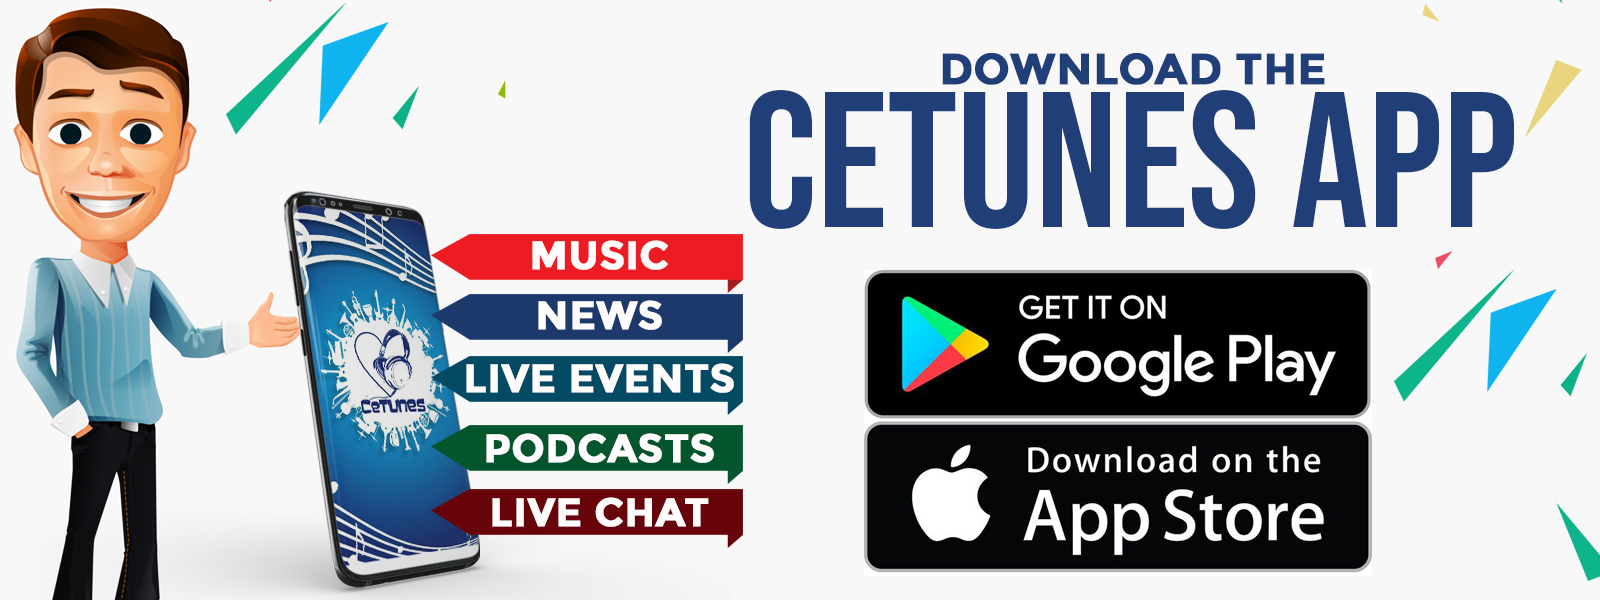 Download the Cetunes Mobile App